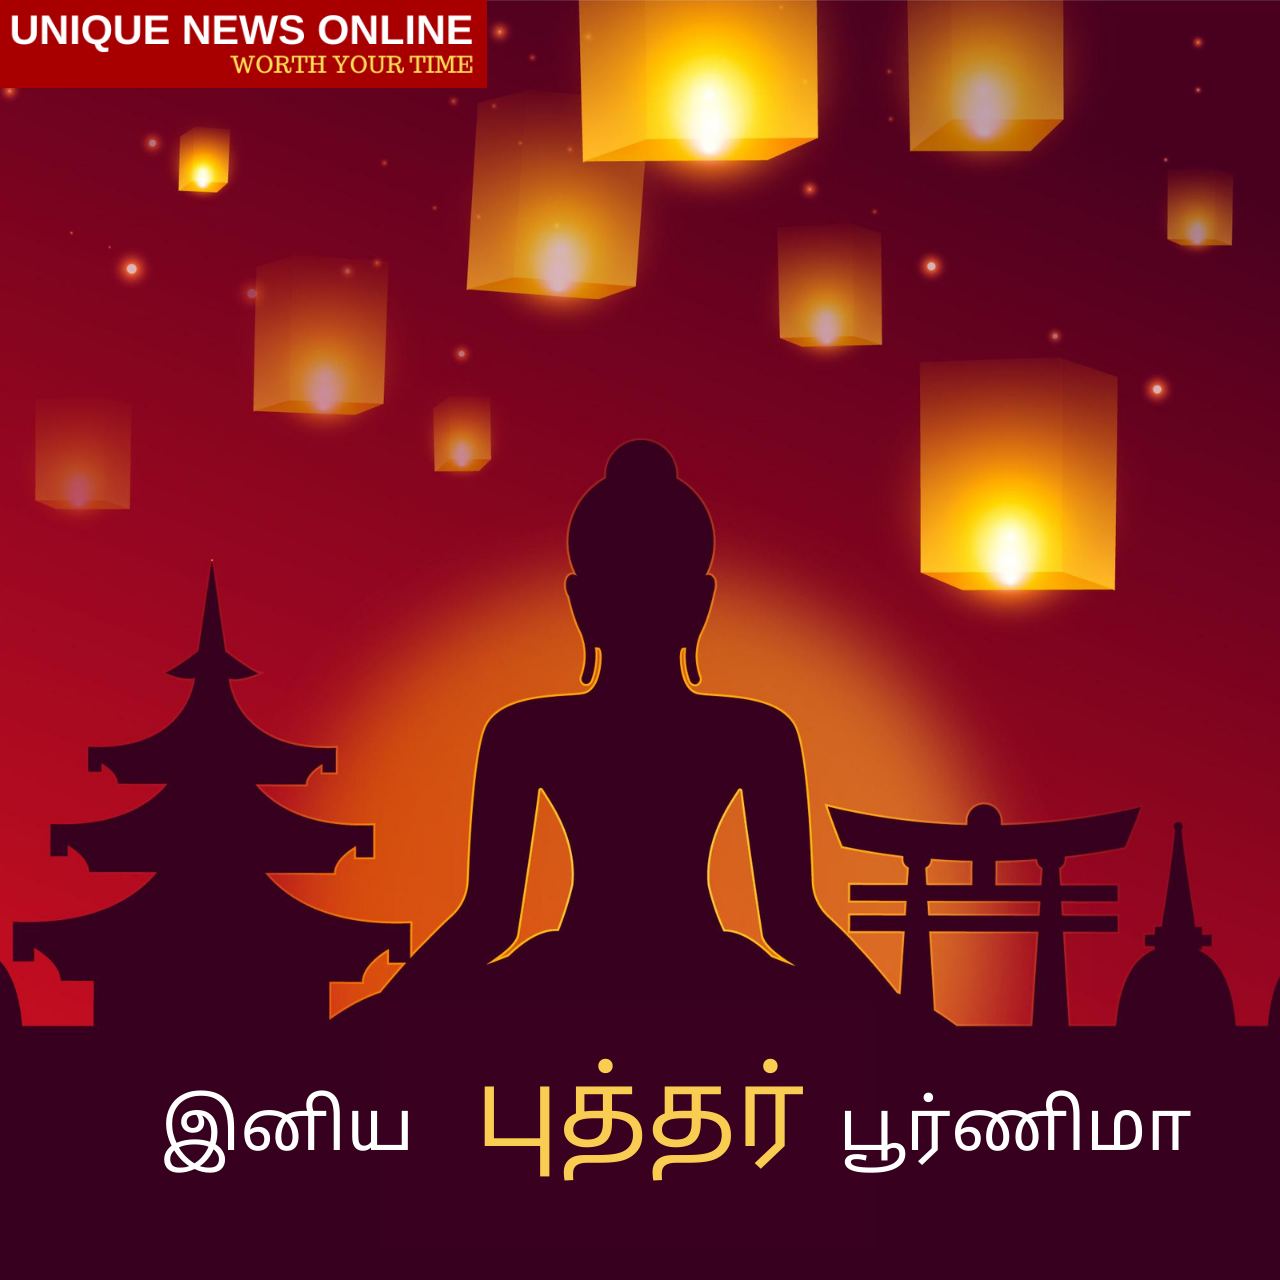 Buddha Purnima greetings in Tamil